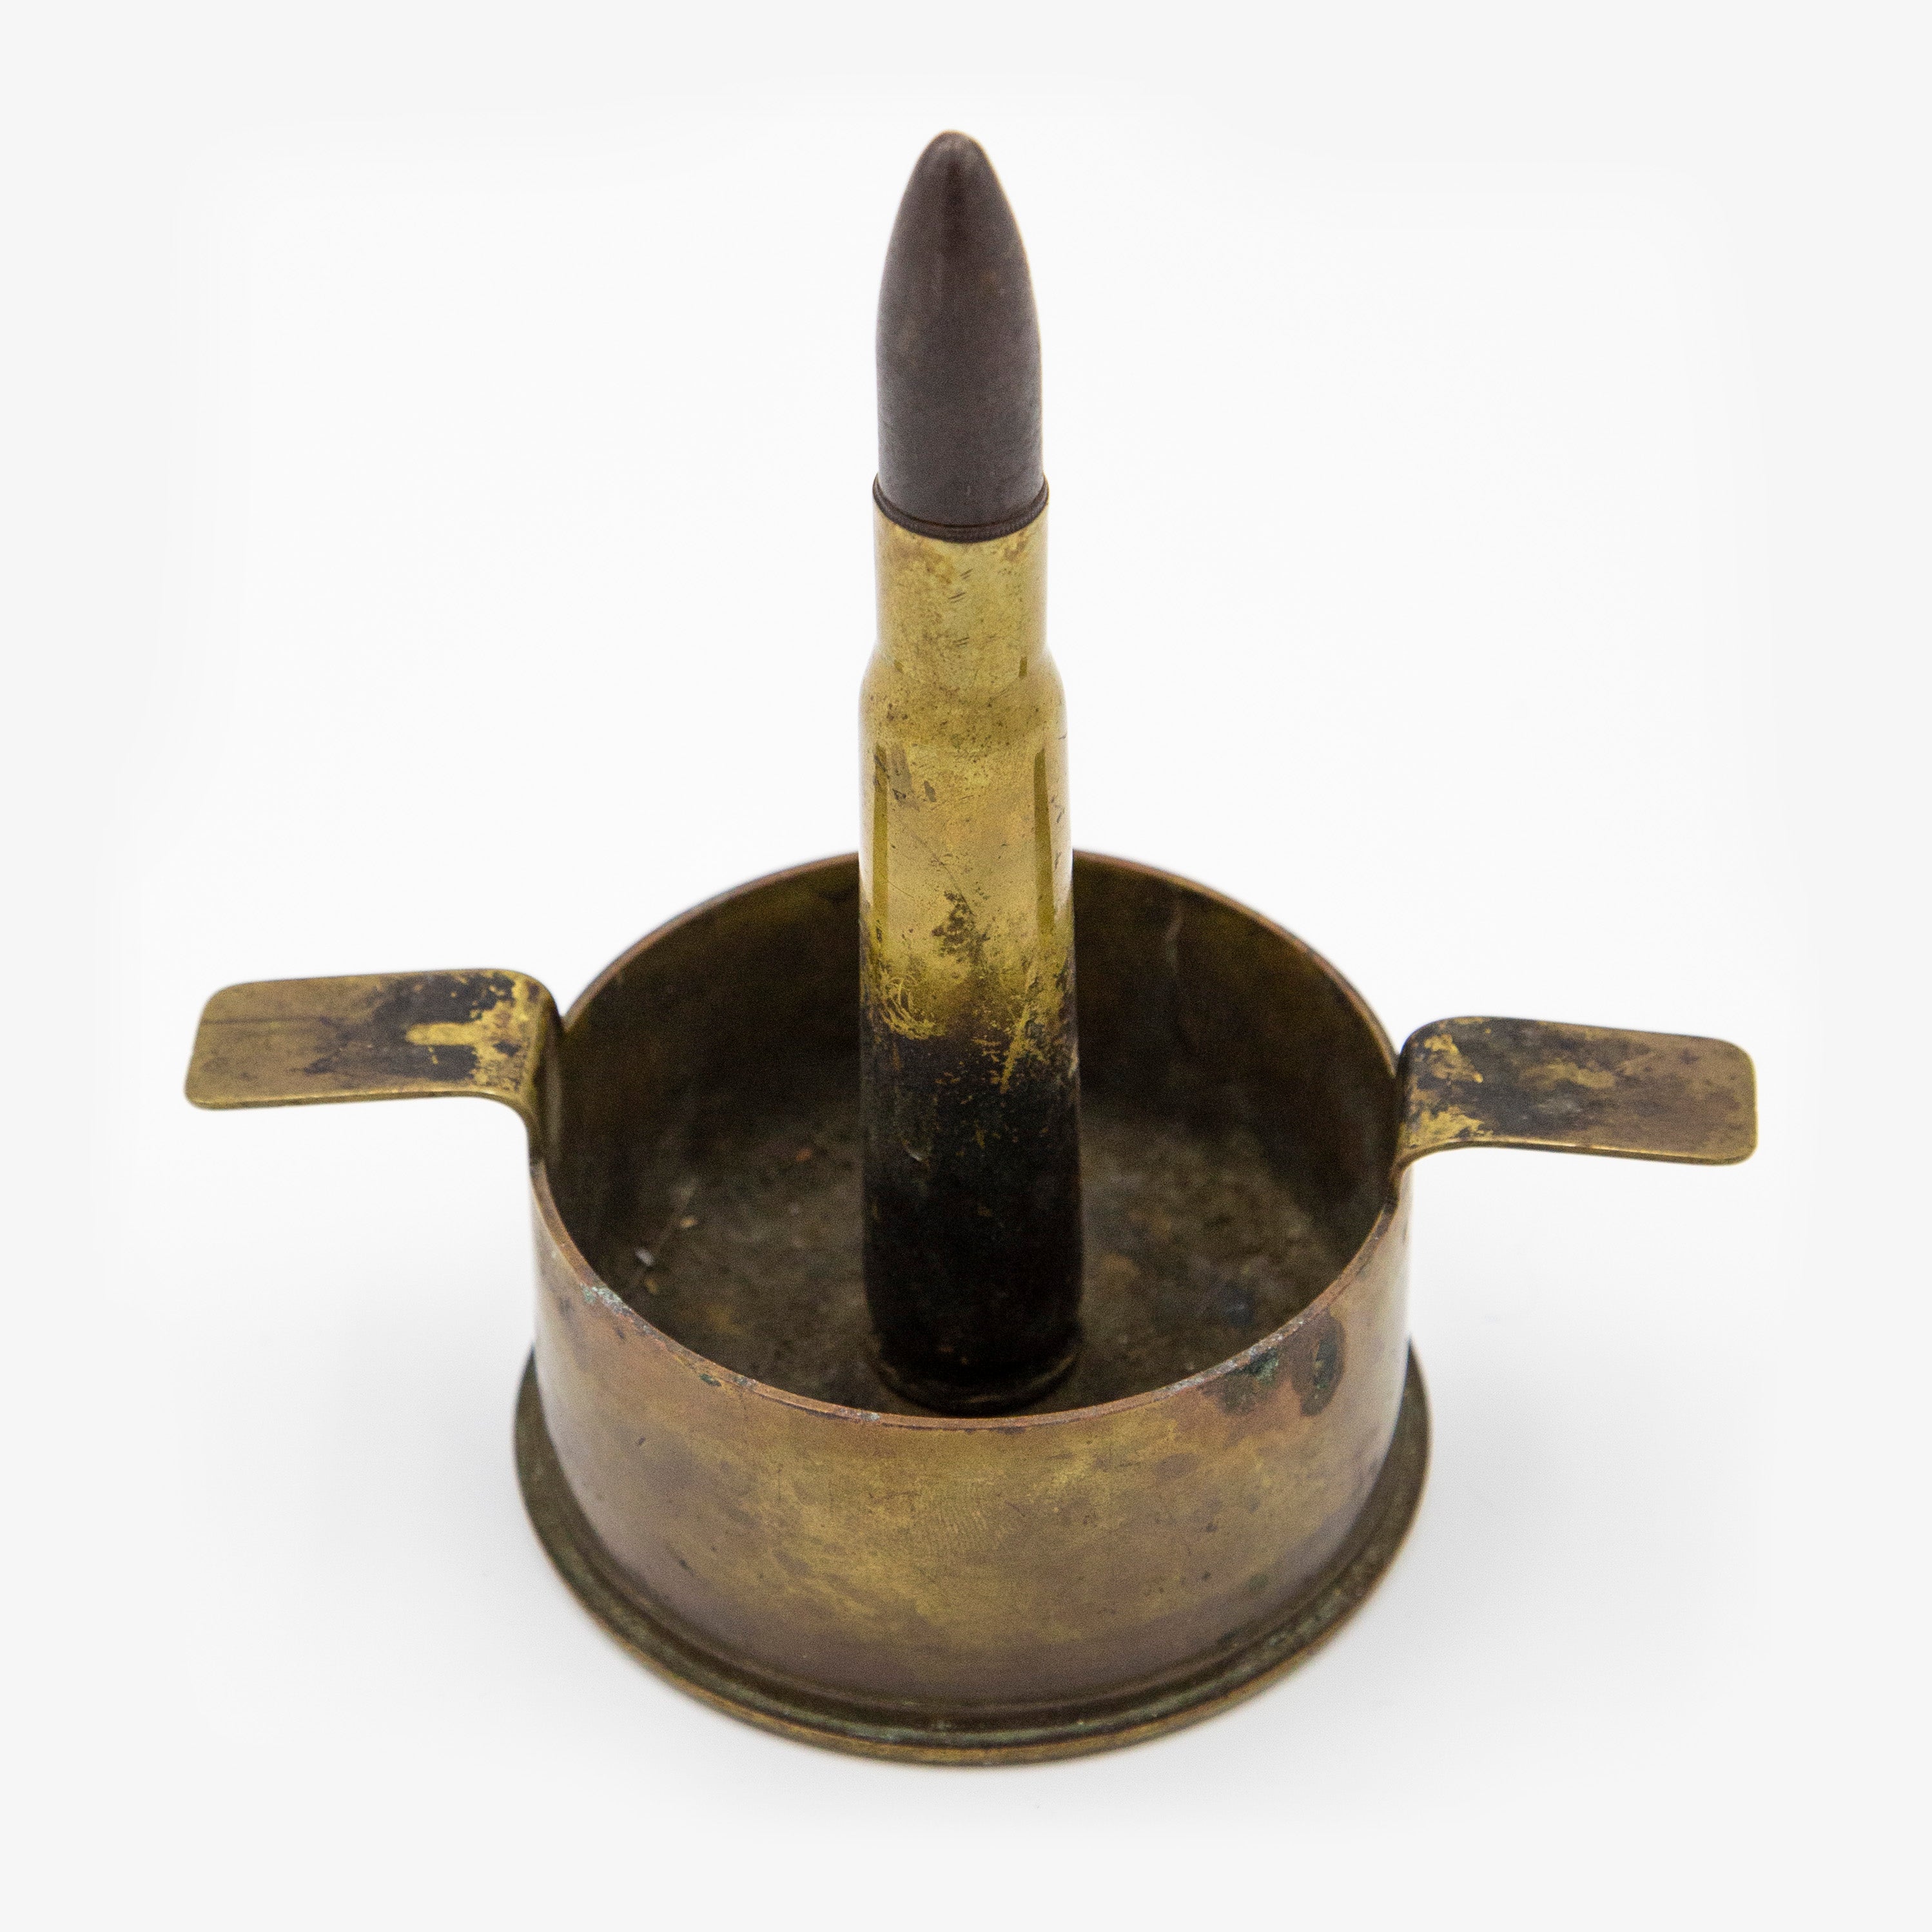 Vintage Brass Trench Art Artillery Shell Ashtray